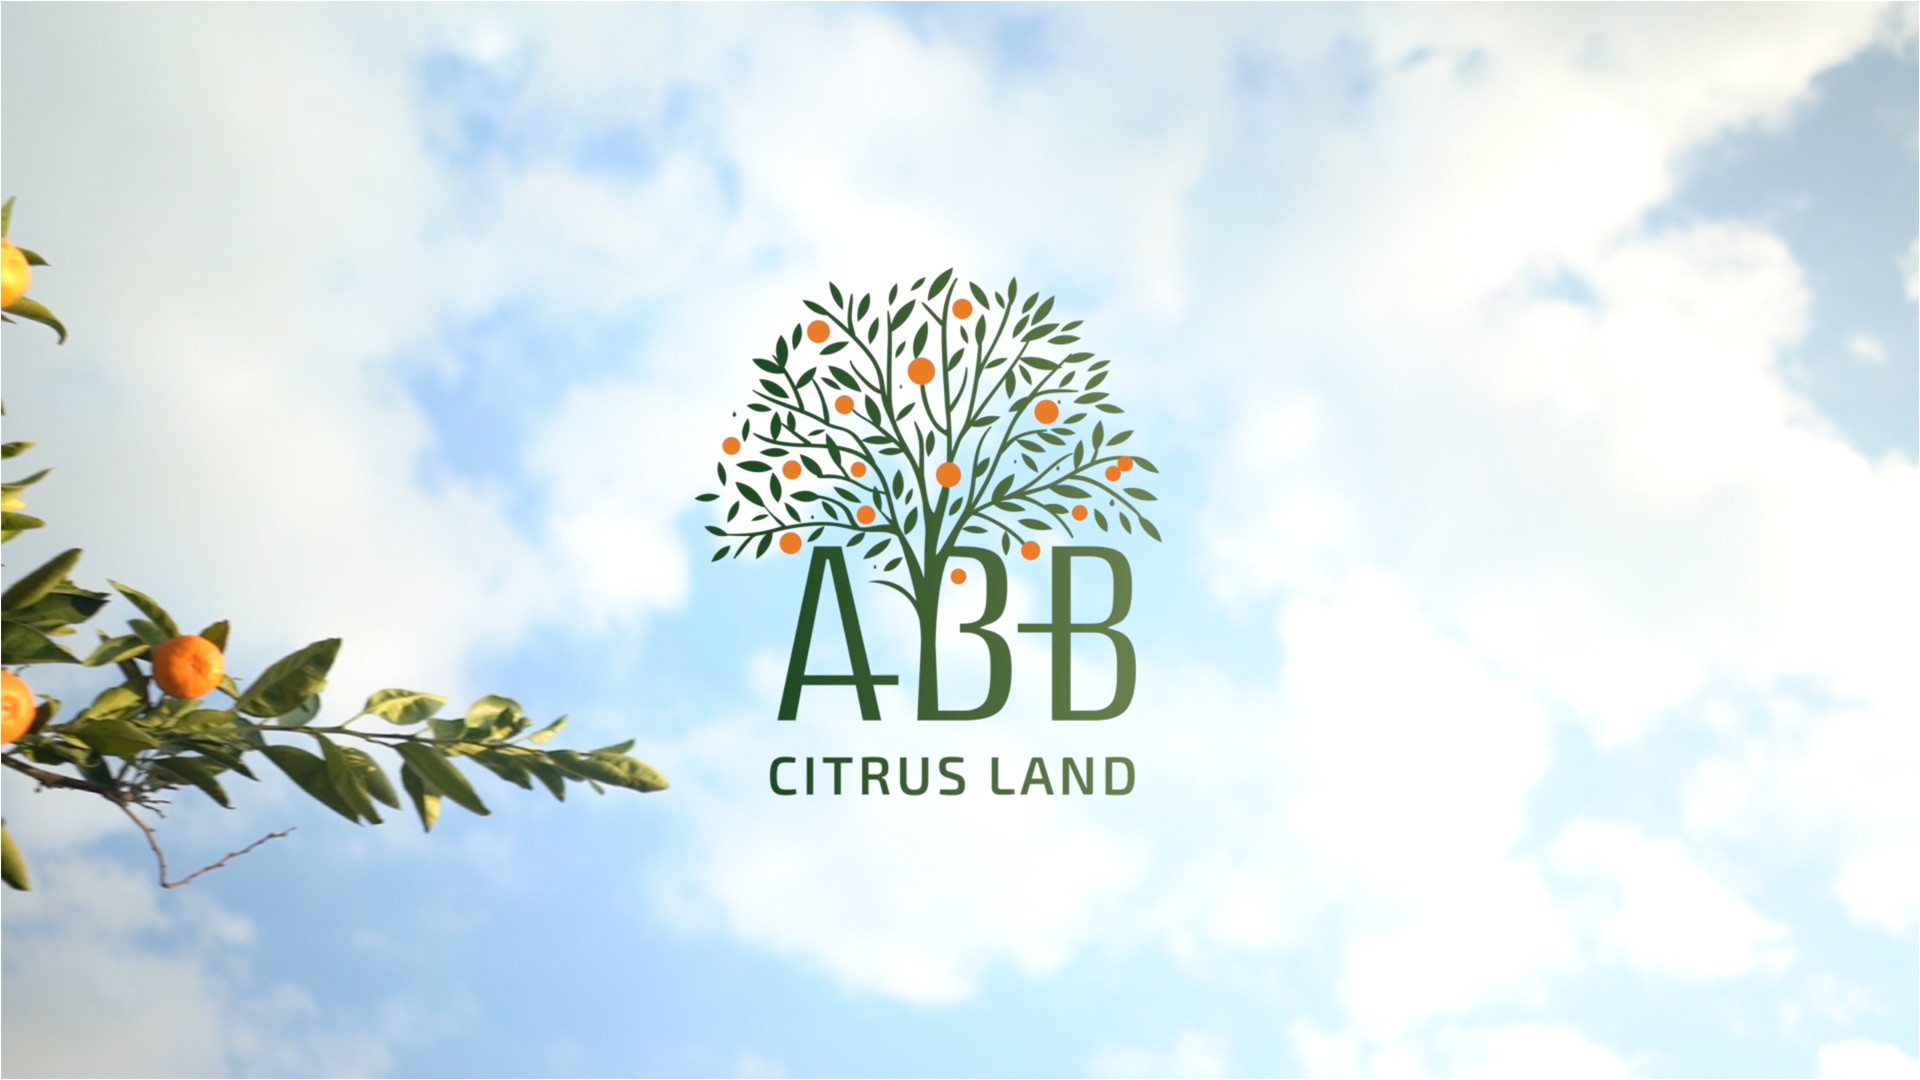 ABB Citrus Land